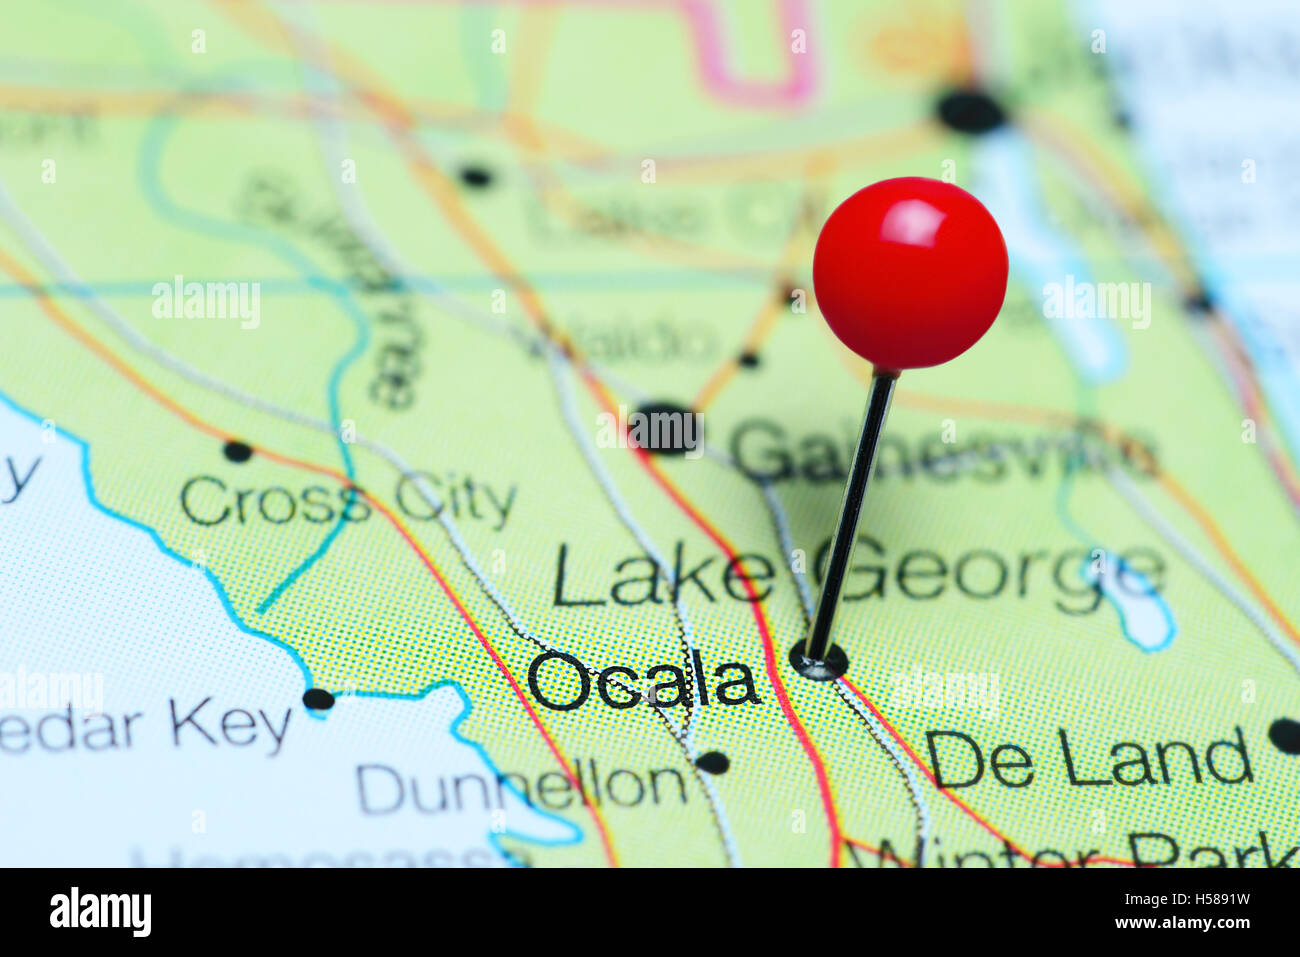 Ocala pinned on a map of Florida, USA Stock Photo